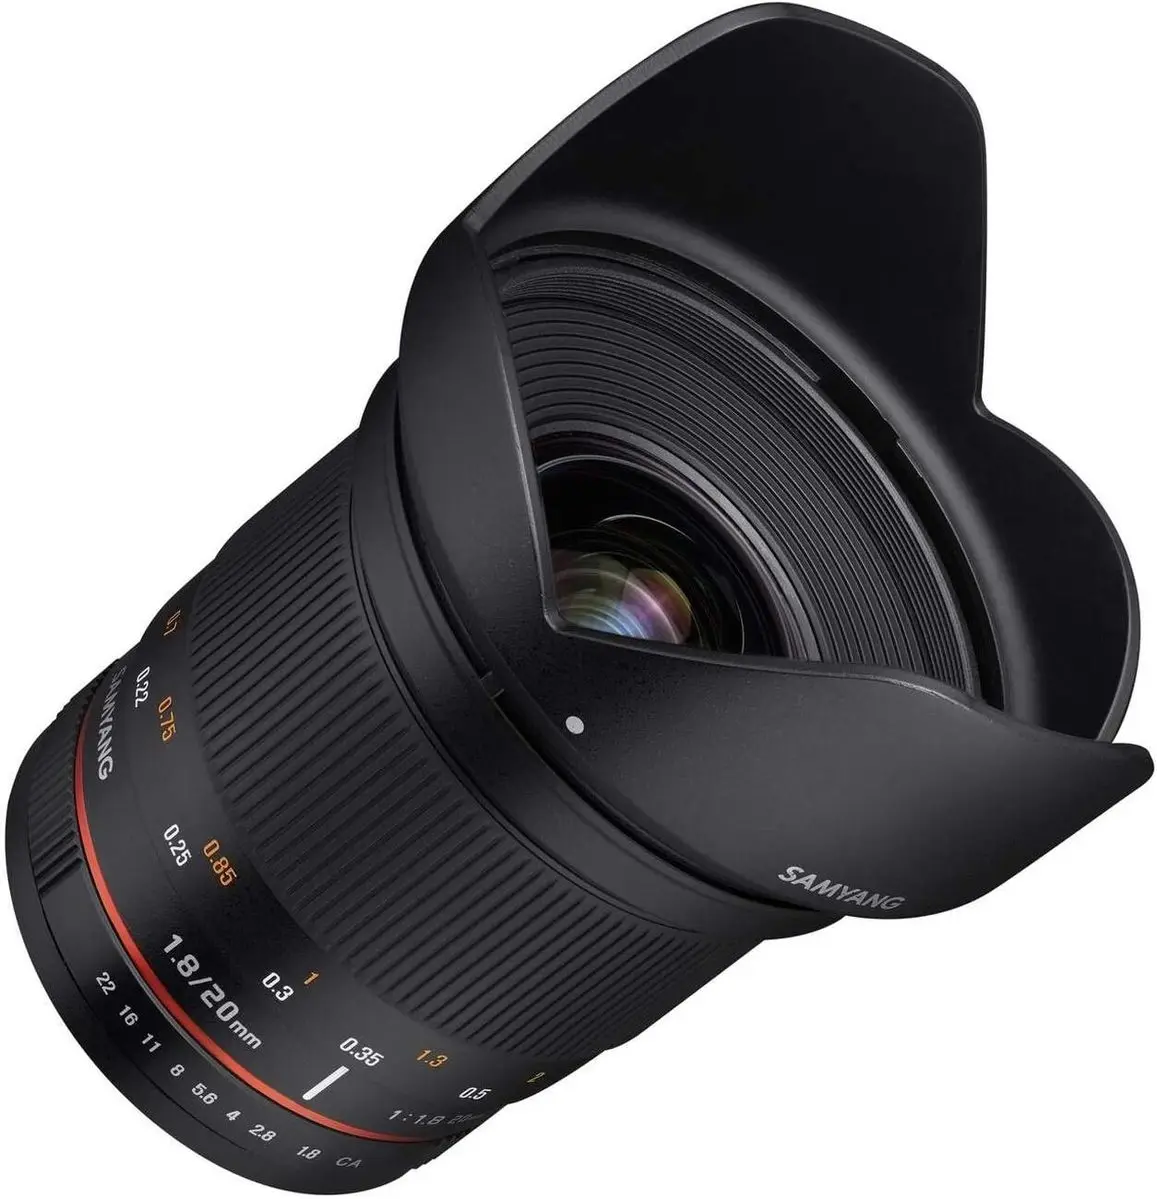 1. Samyang 20mm F1.8 ED AS UMC (Nikon AE) Lens